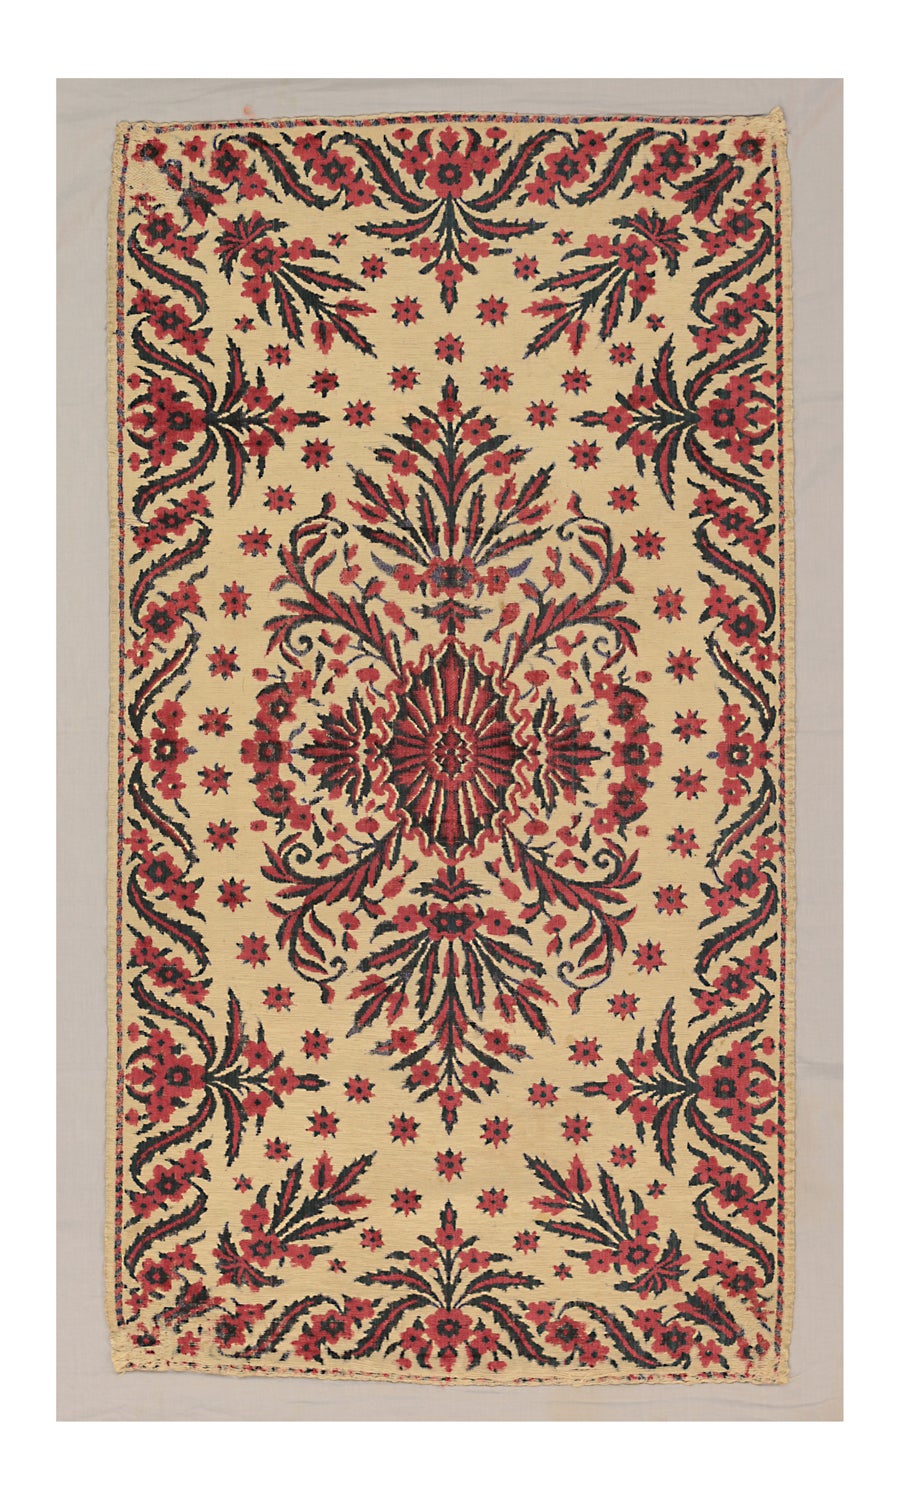 Antique Turkish Ottoman Beige Background Color Textile, 19th Century